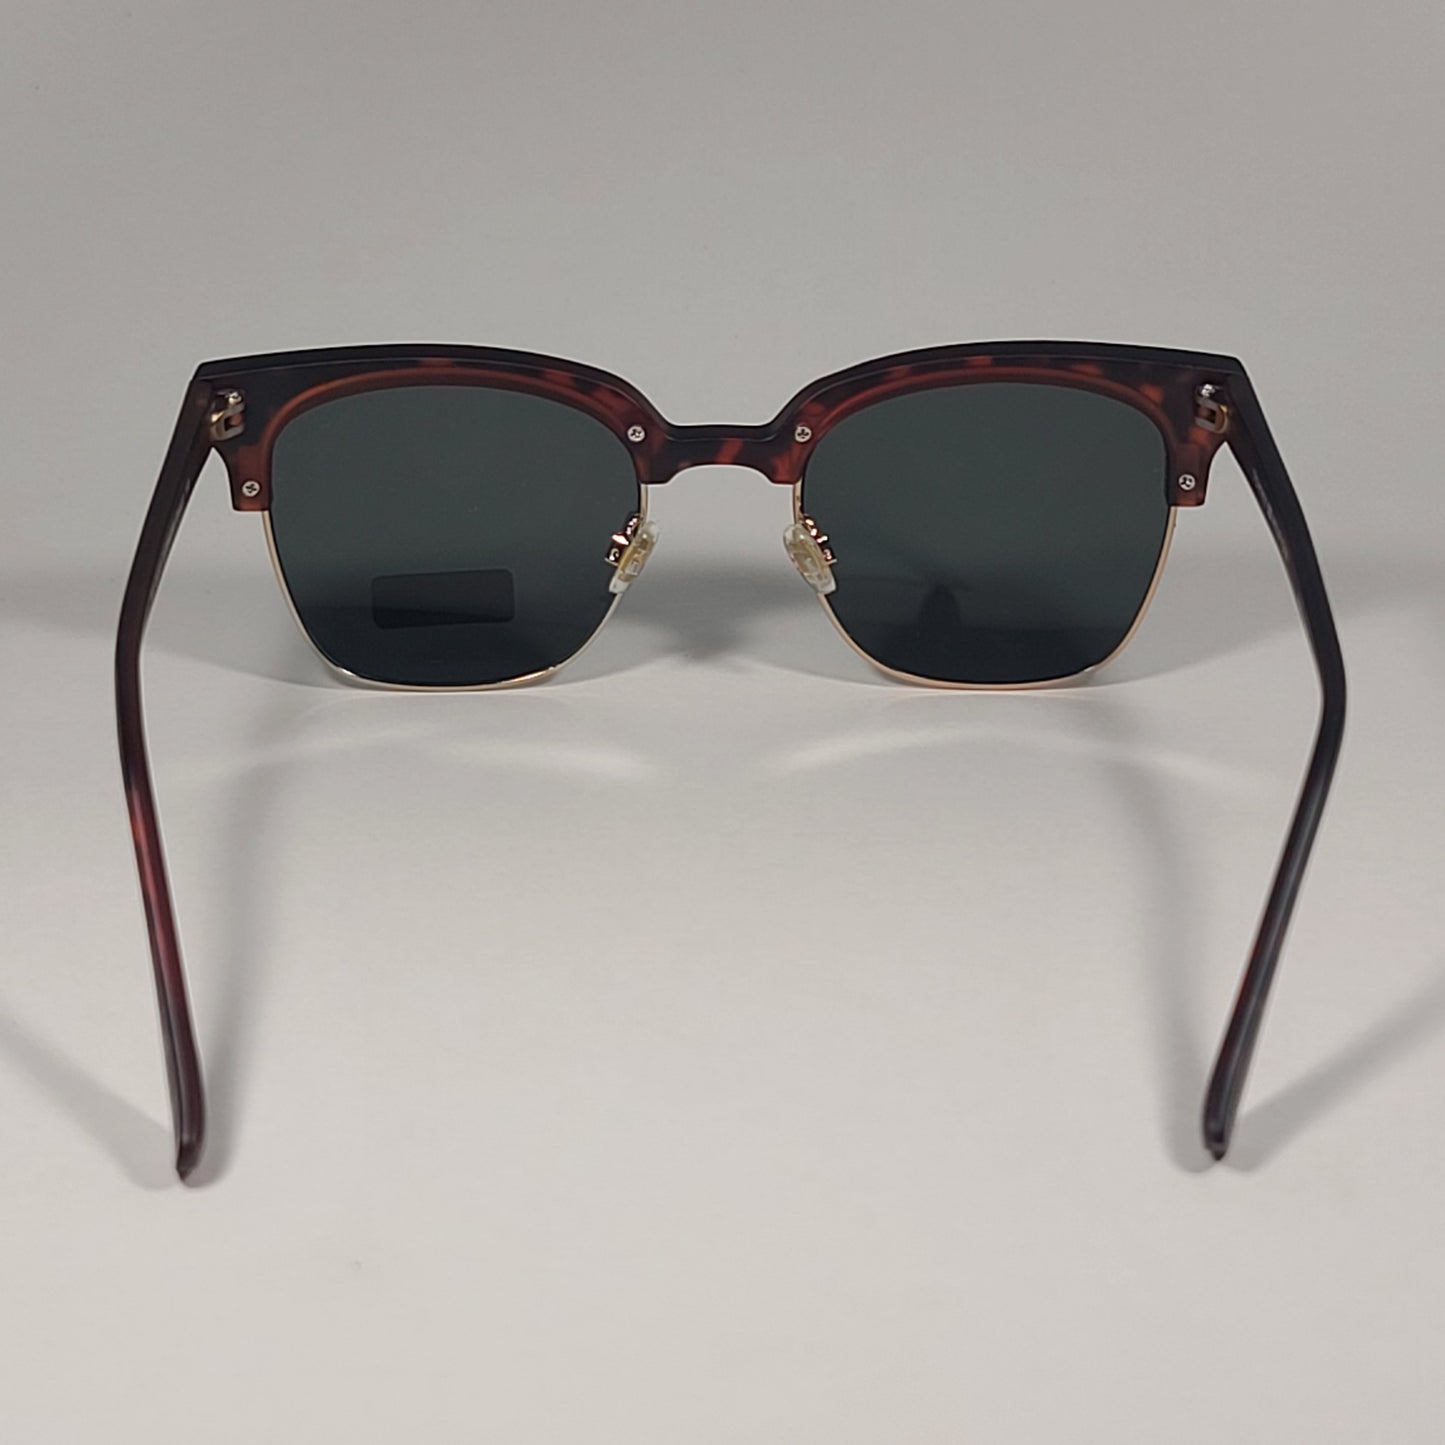 Tommy Hilfiger WP OU531 Square Club Sunglasses Matte Brown Tortoise Gold Frame / Green Lens - Sunglasses